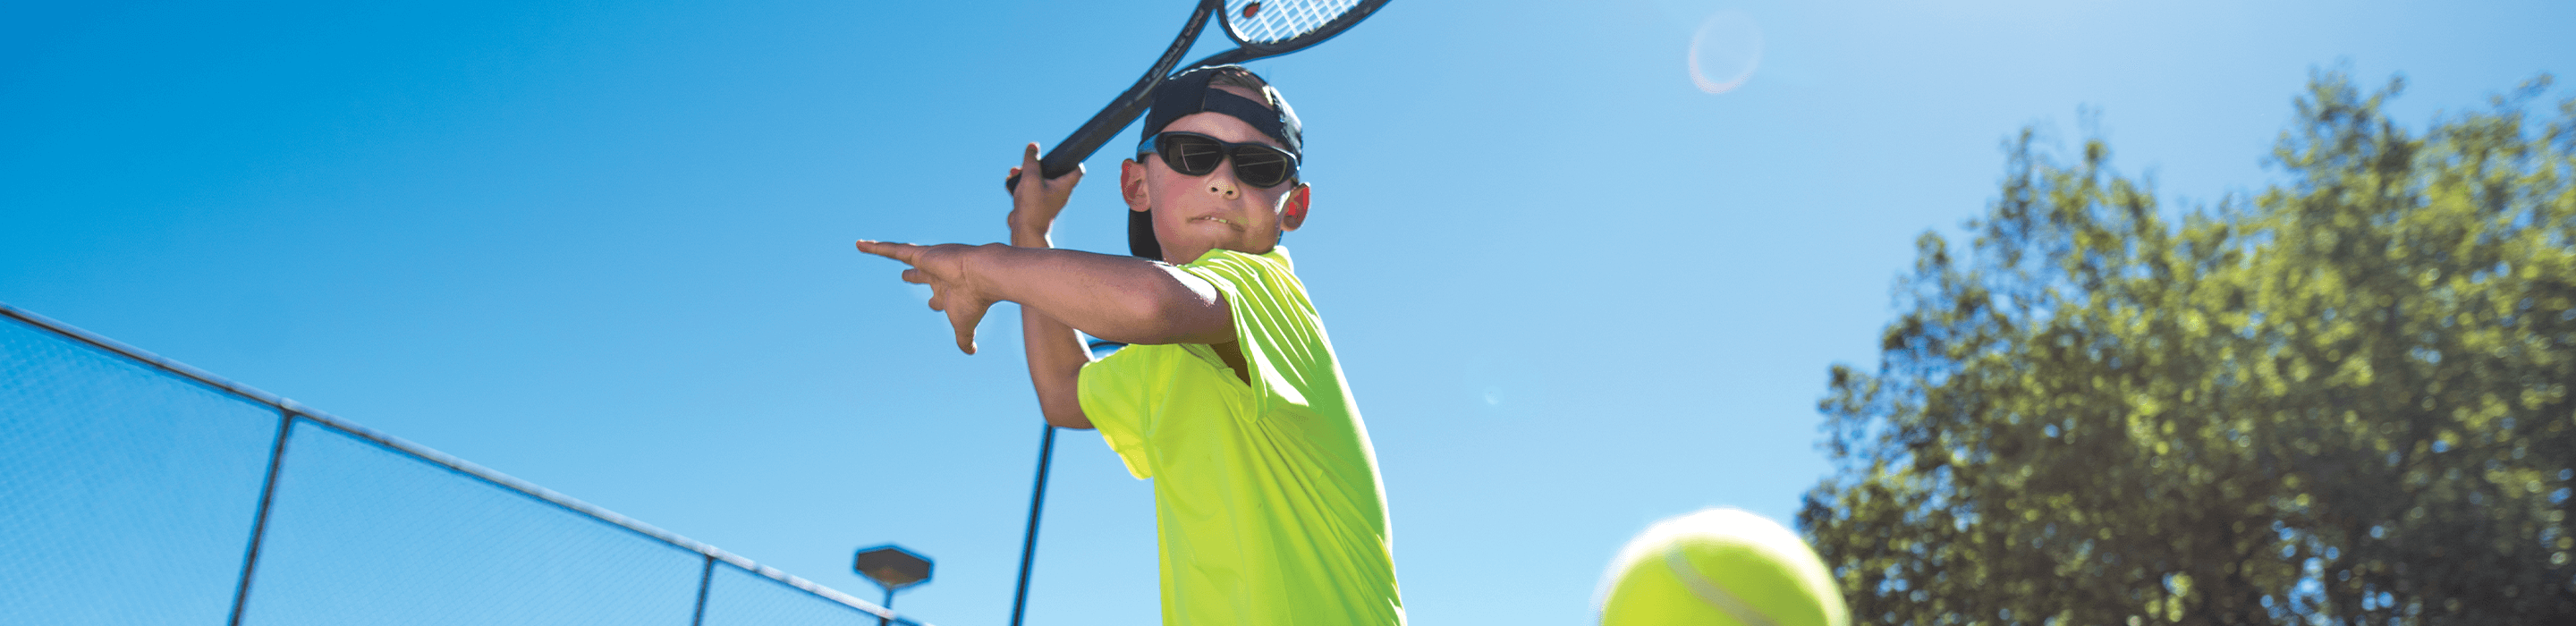 Kids' Tennis Sunglasses & Kids' Tennis Glasses | SportRx